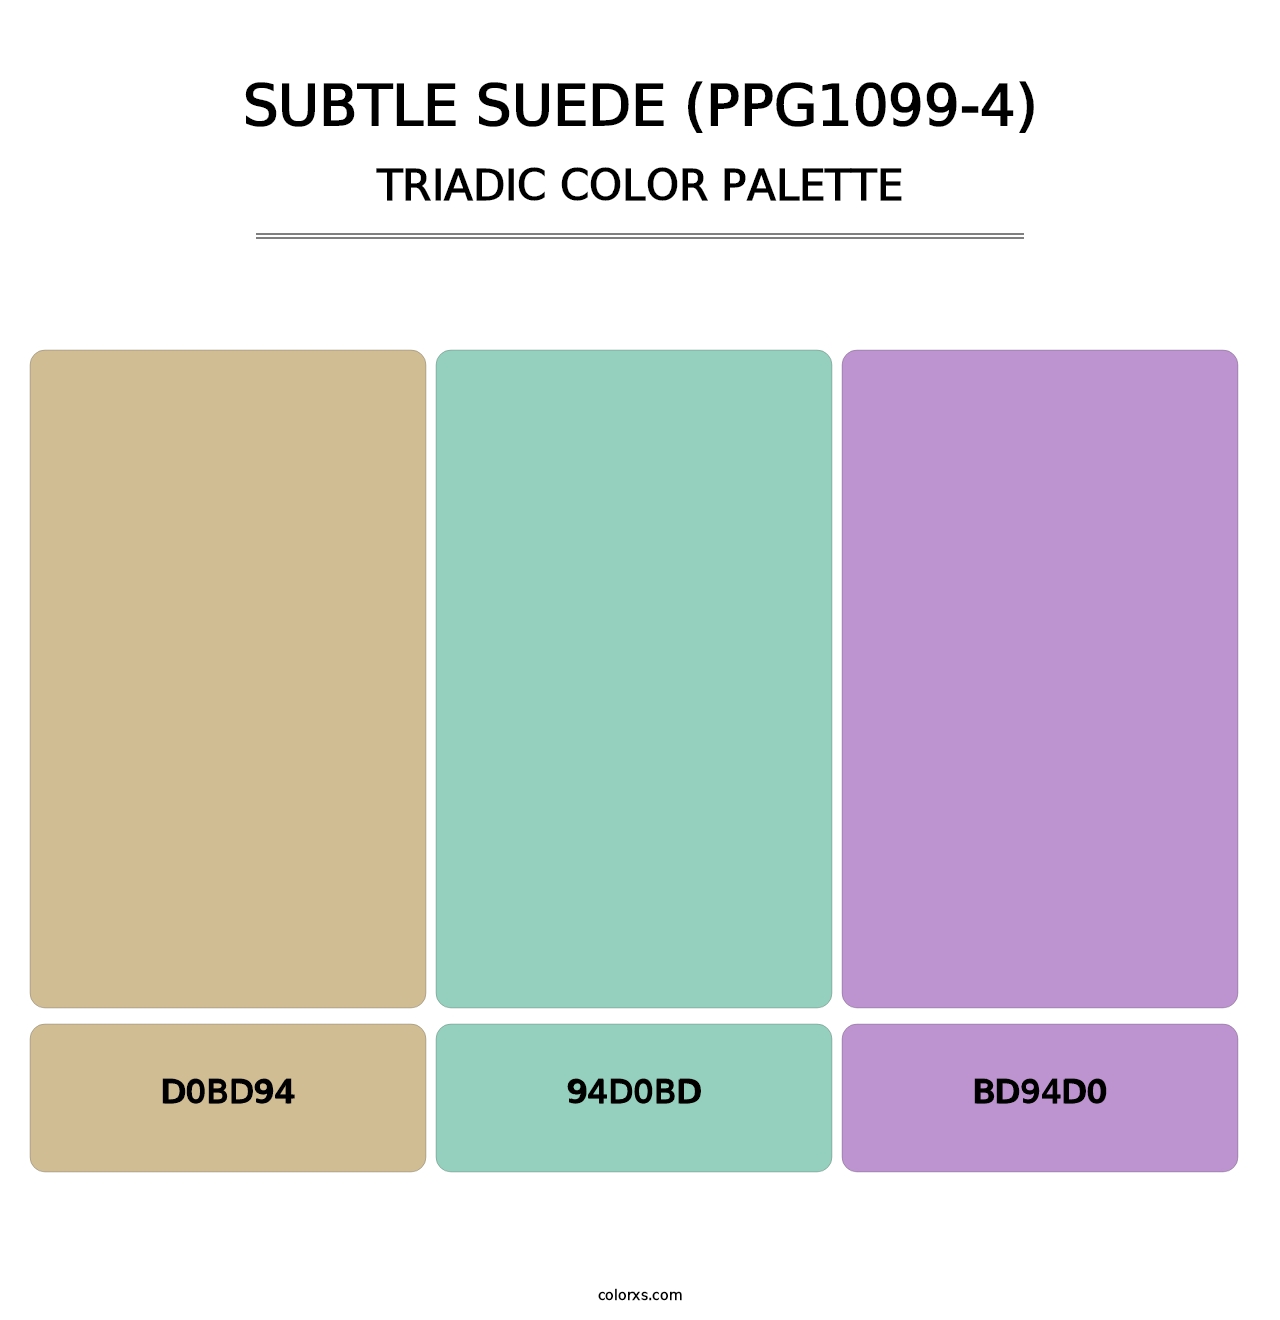 Subtle Suede (PPG1099-4) - Triadic Color Palette